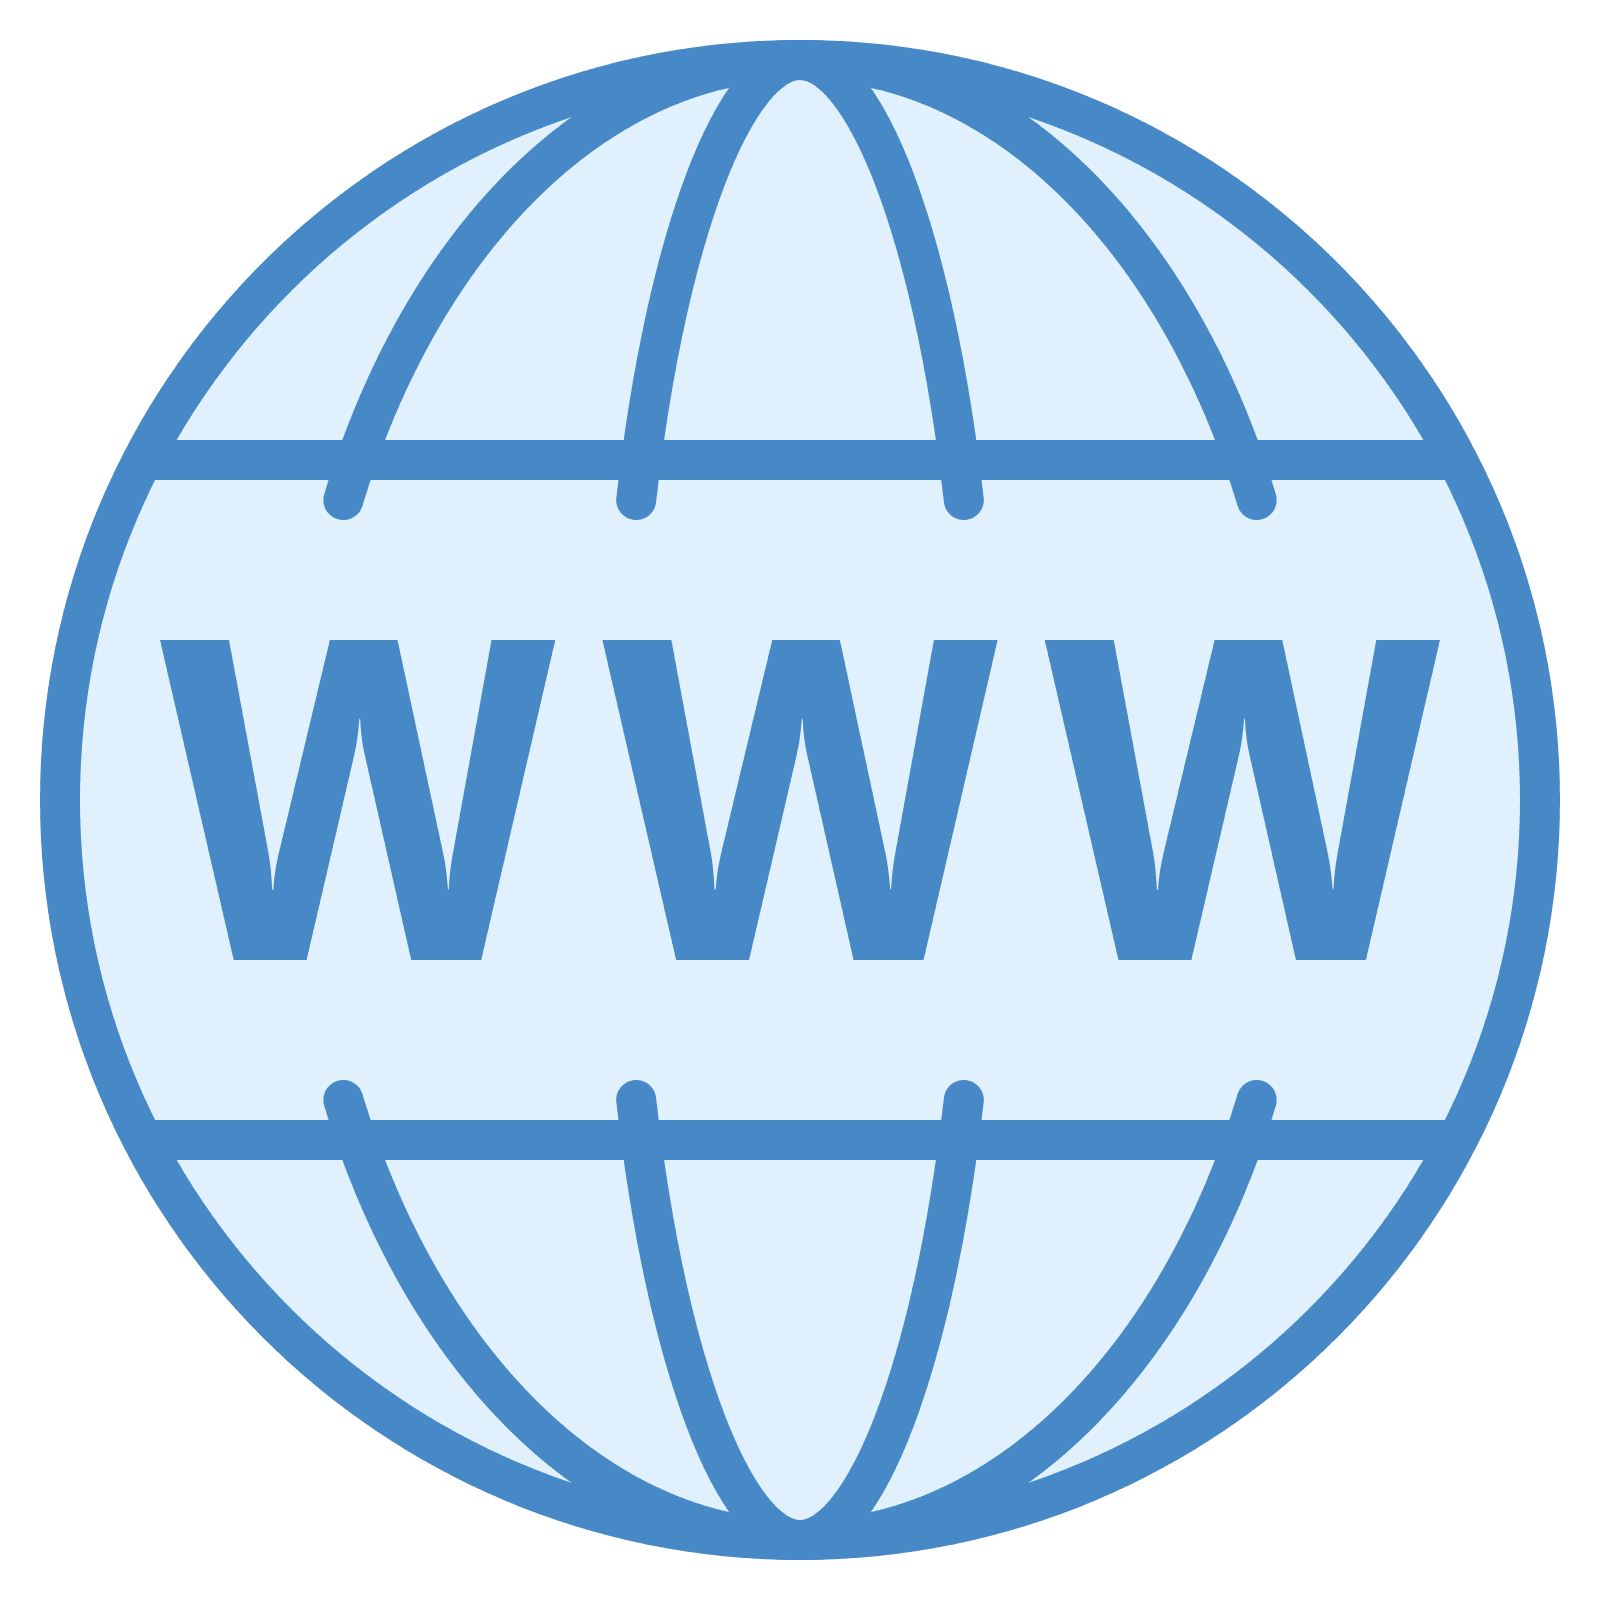 Сайт интернета http www. Иконка интернет. Значок сайта. Иконки для сайта. Значок всемирной паутины.